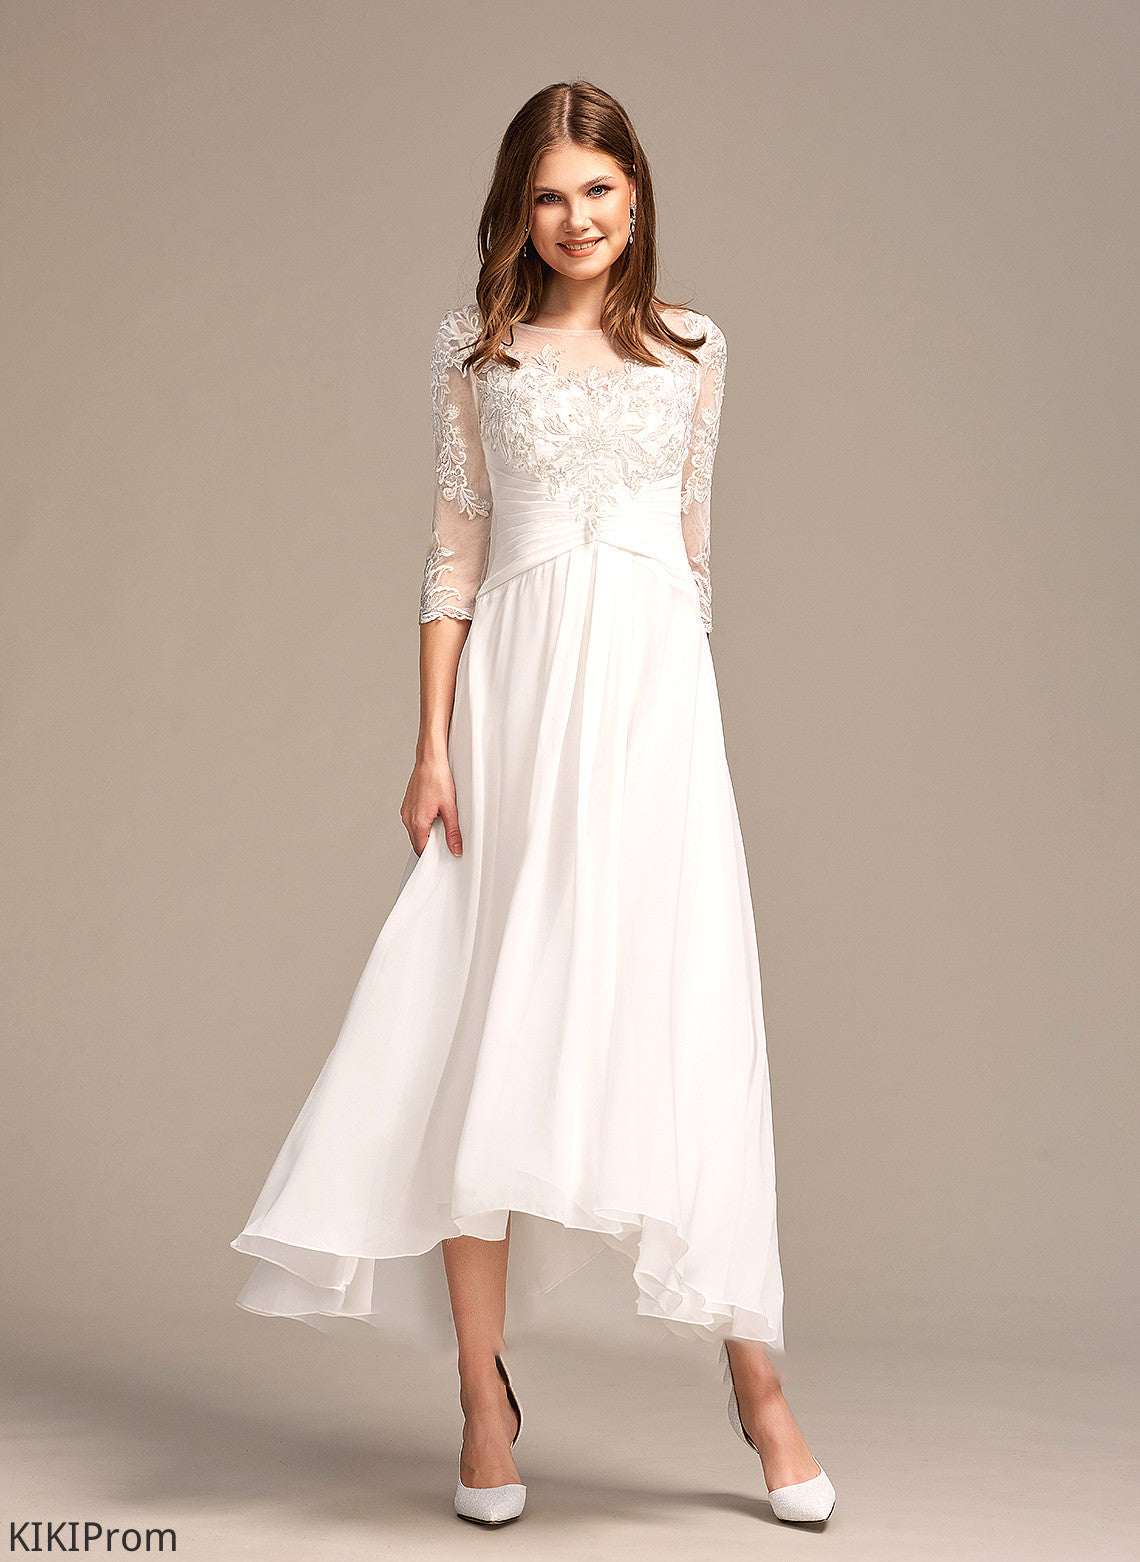 Illusion A-Line Dress Asymmetrical With Wedding Jada Wedding Dresses Lace